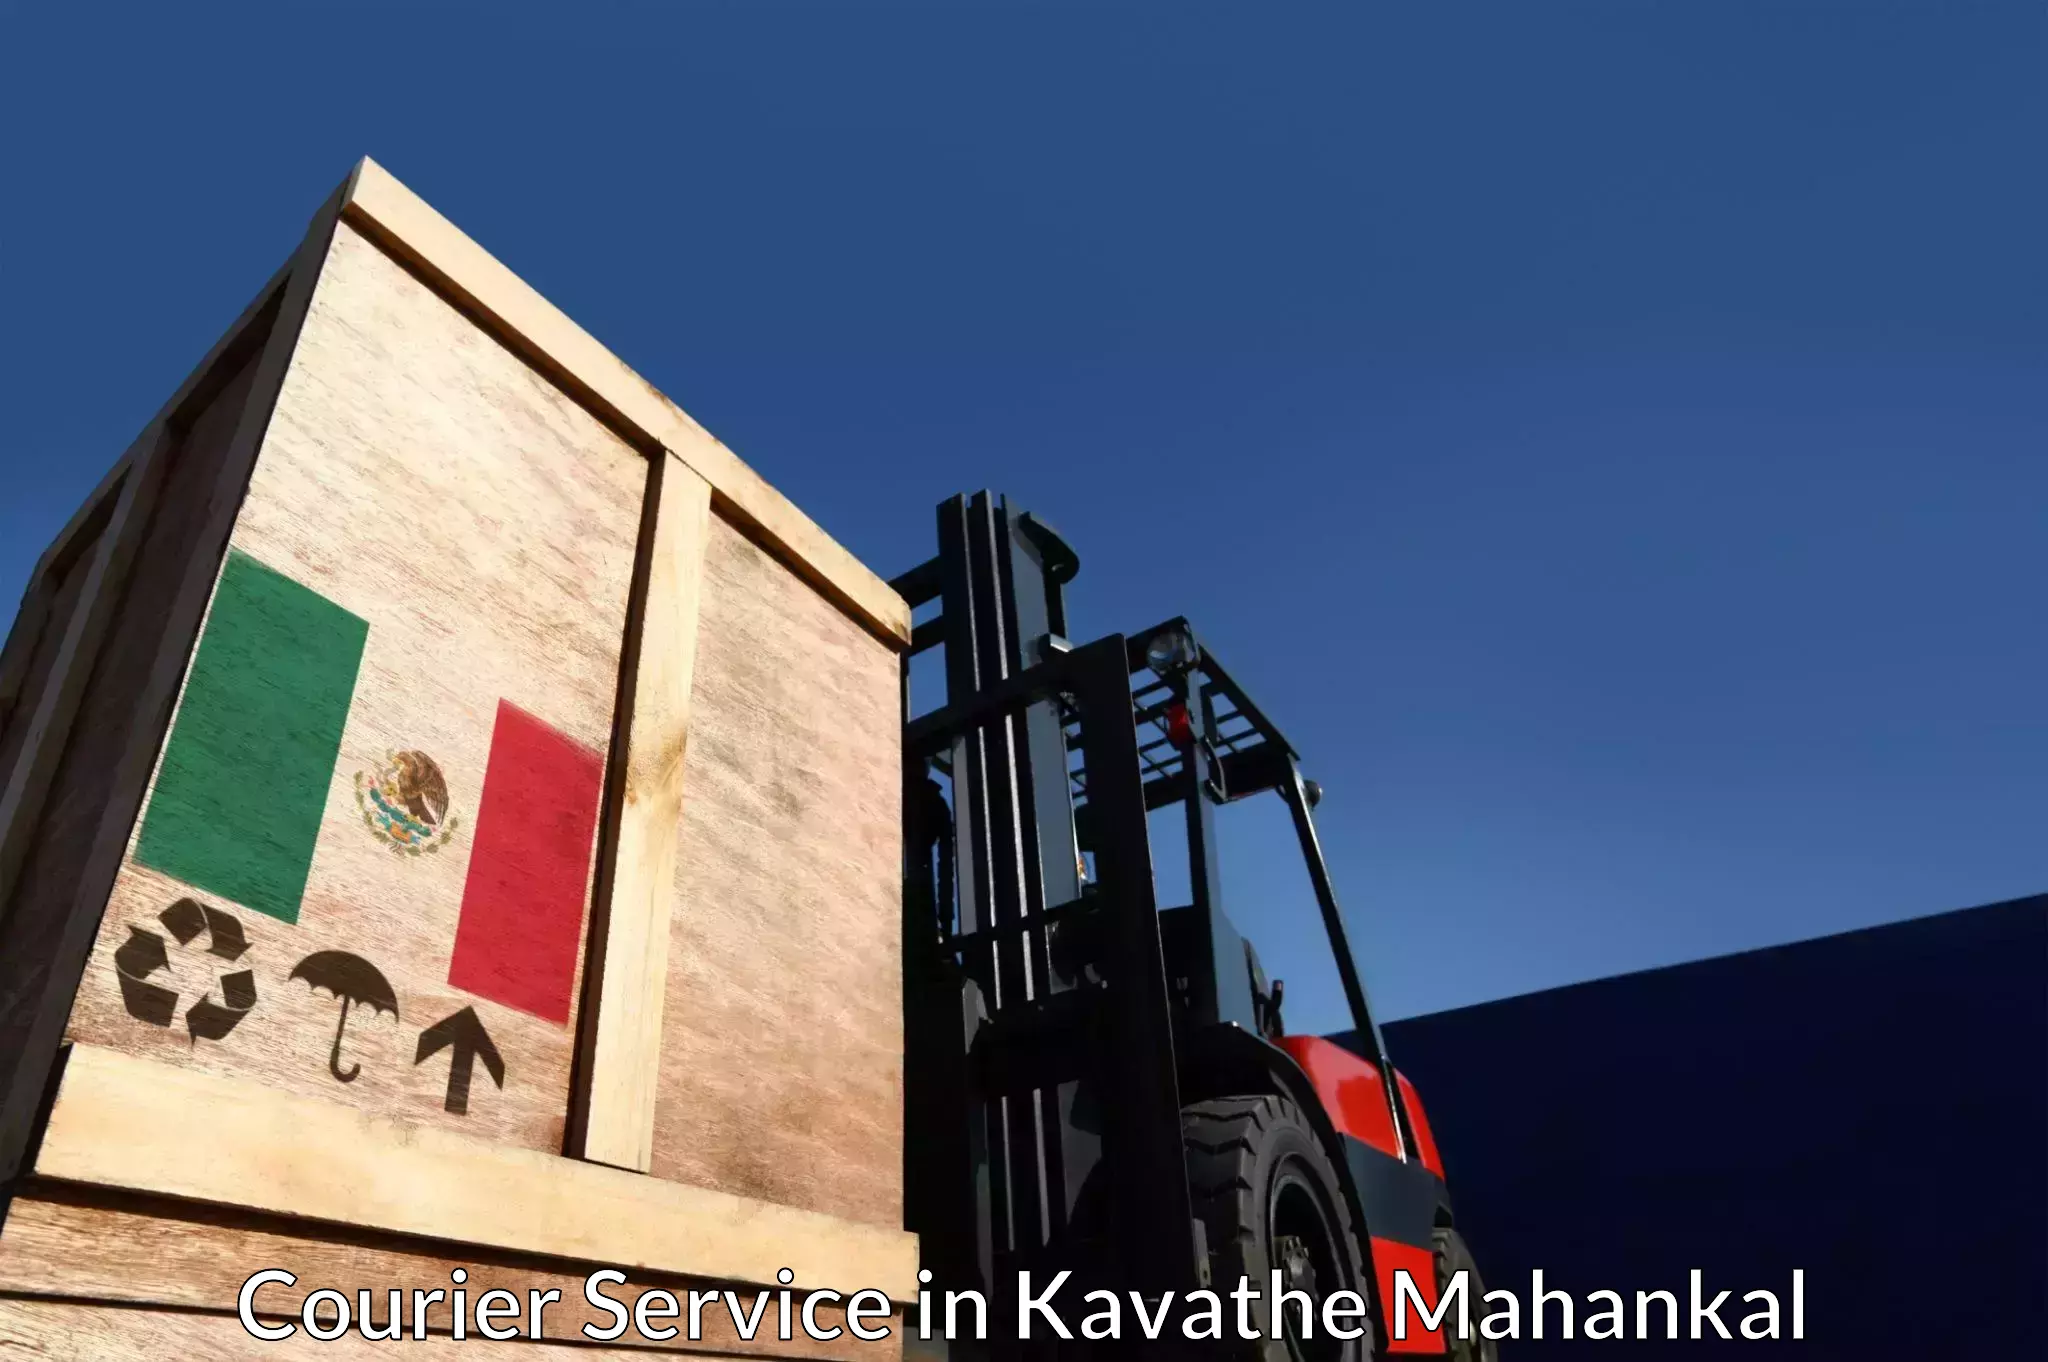 Effective logistics strategies in Kavathe Mahankal